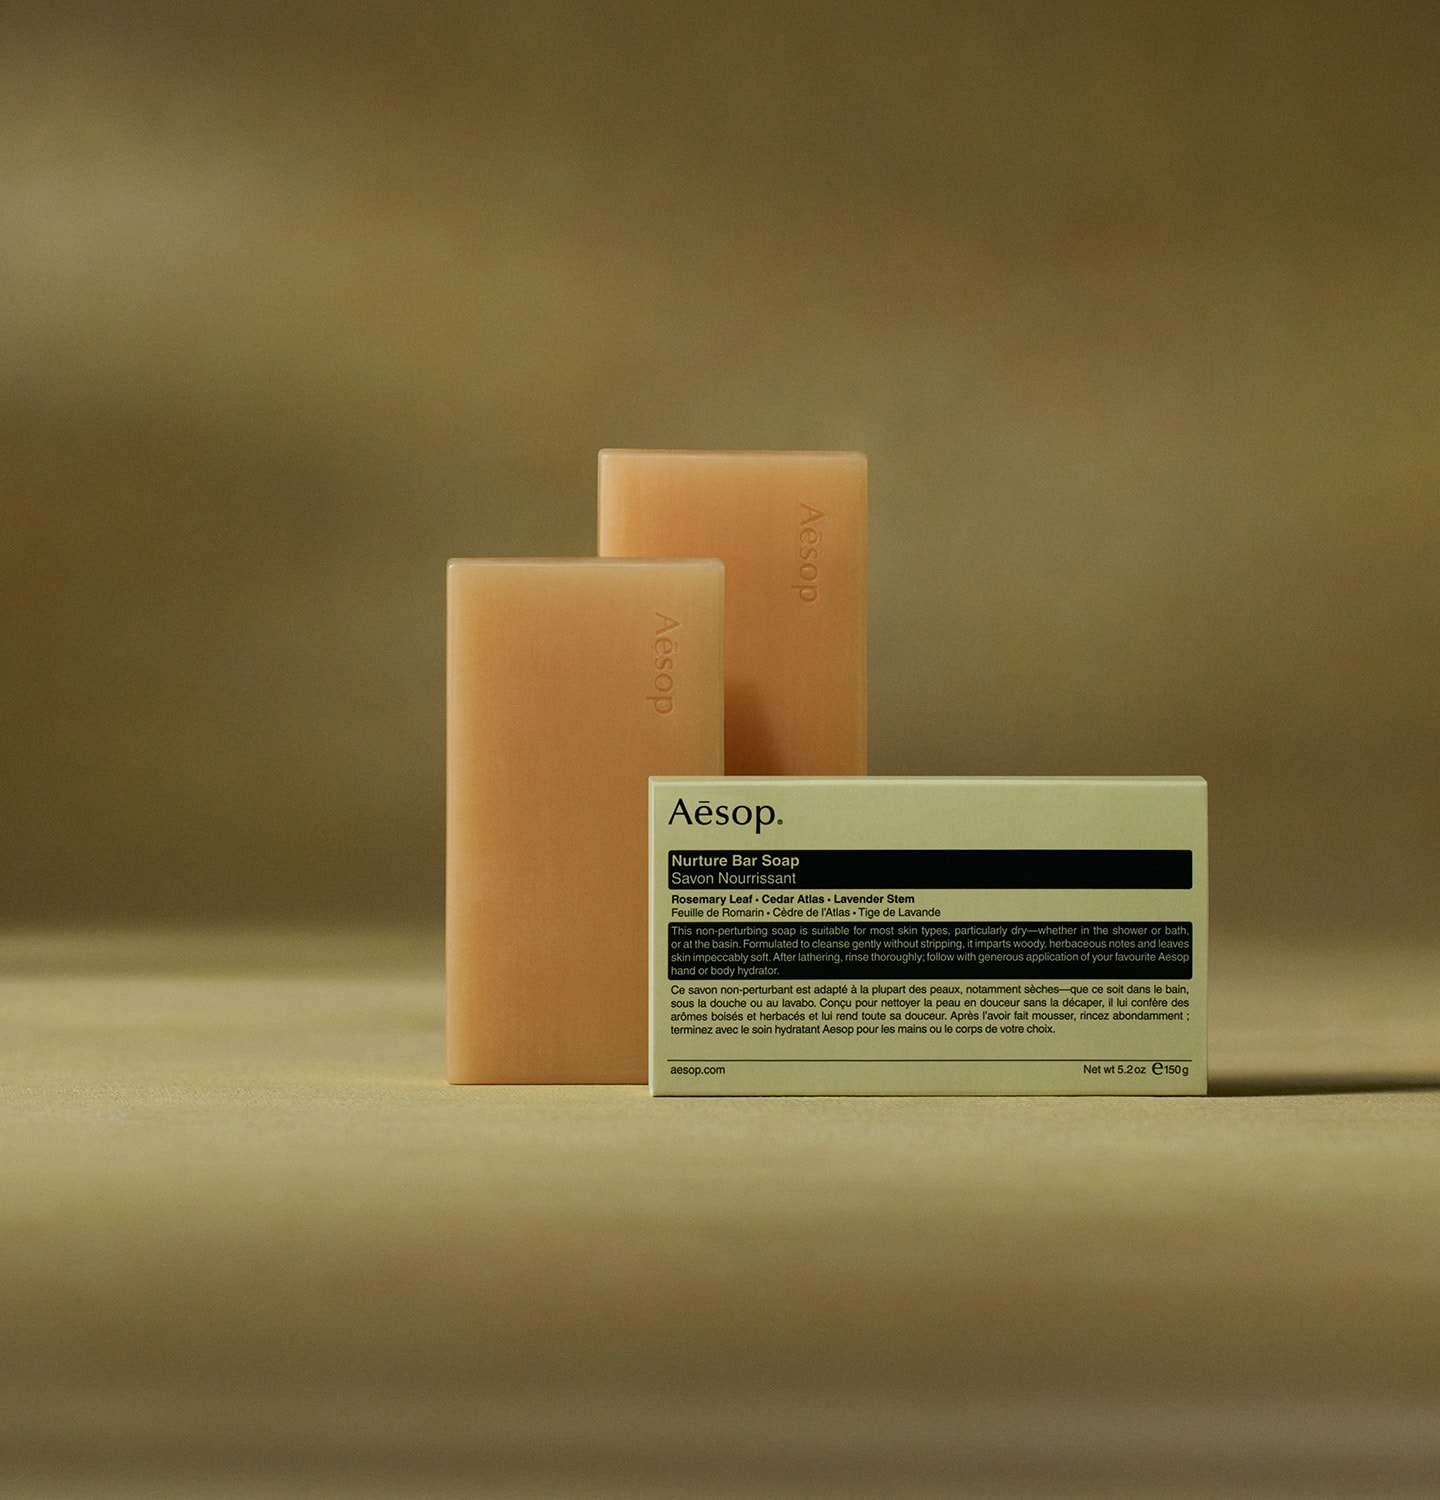 Aesop Nurture bar soaps placed horizontally behind the packaging in dark green textured background